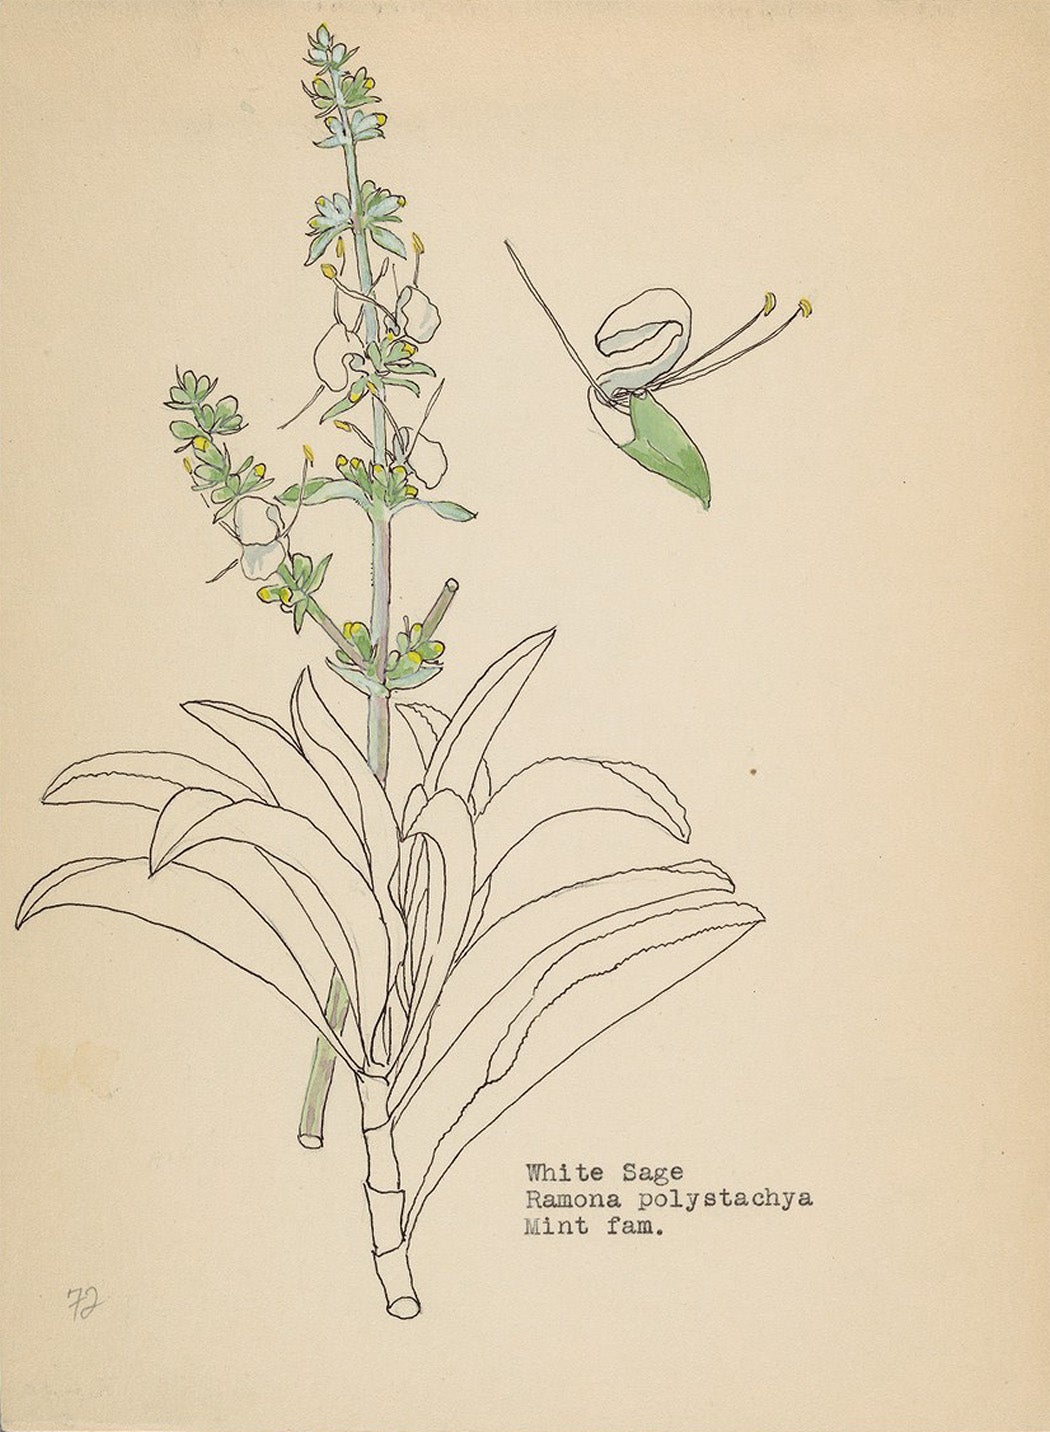 “Ramona polystachya (White Sage) ; Mint Family;” Tessie K. Frank Watercolors, gra00006, Gray Herbarium Library, Botany Libraries, Harvard University.